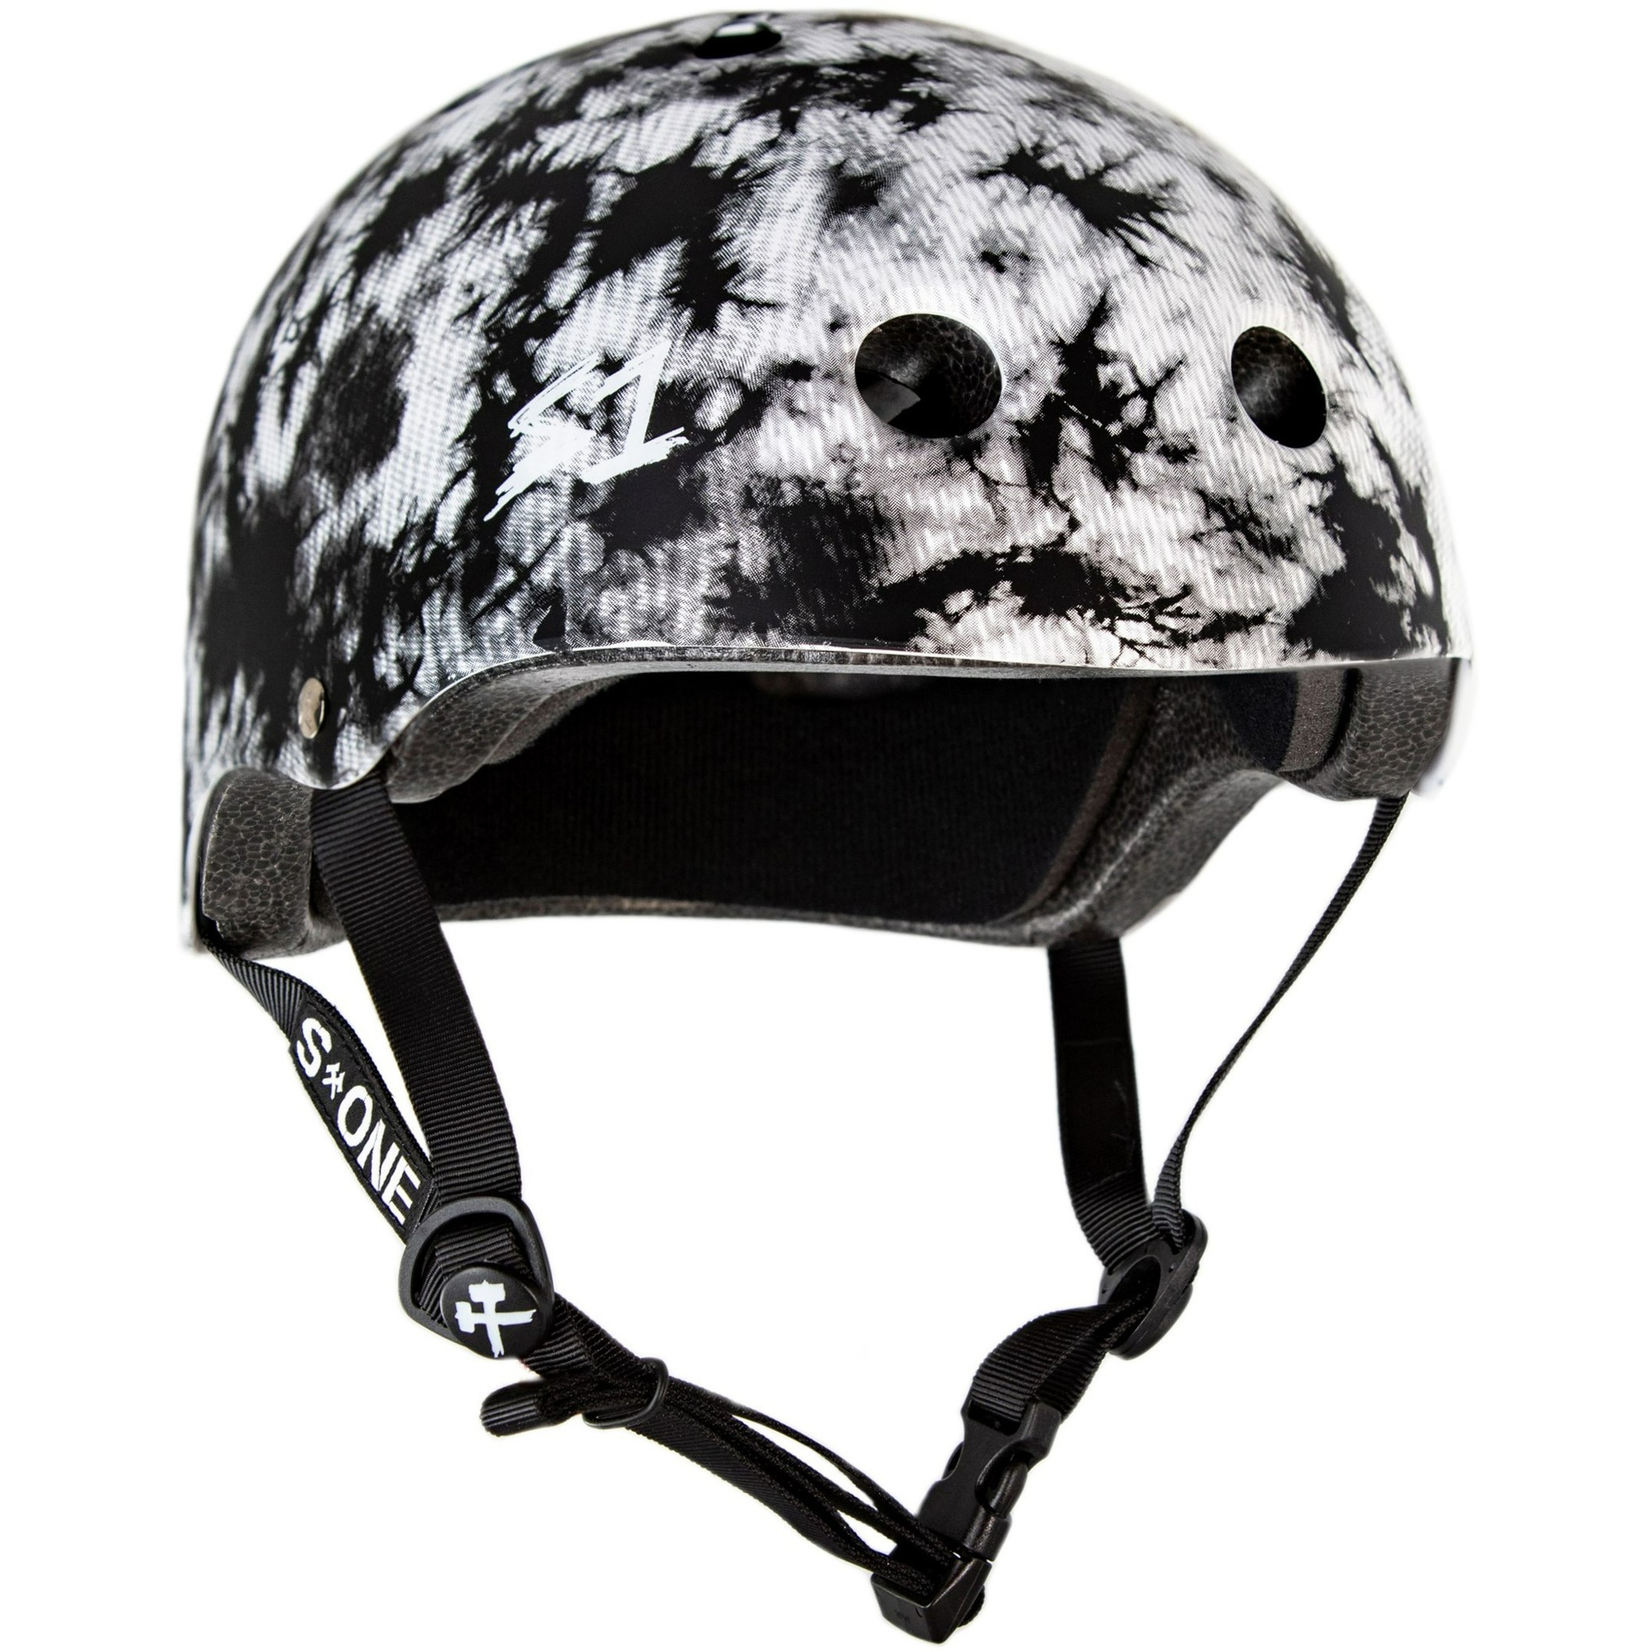 S One Helmet Co Lifer Black & White Tie Dye Matte